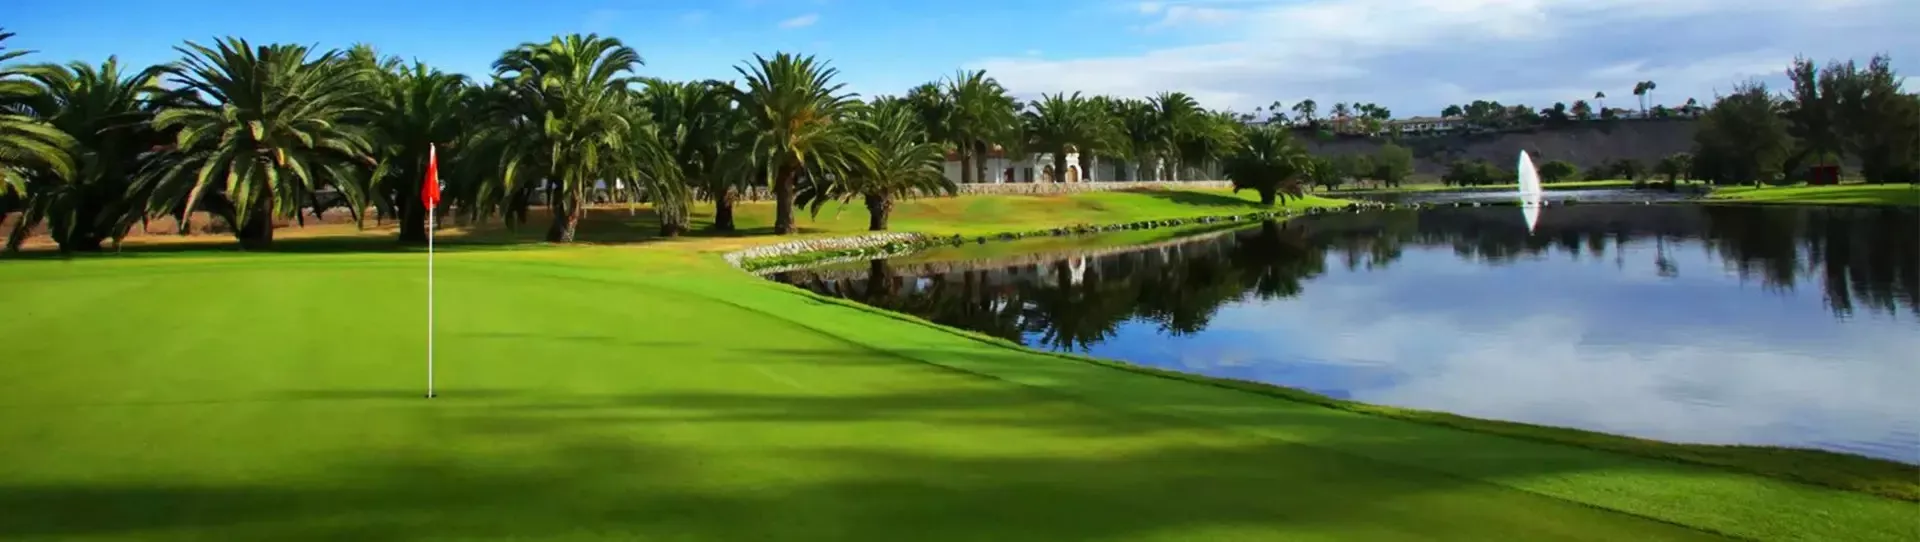 Spain golf courses - Maspalomas Golf Course - Photo 2